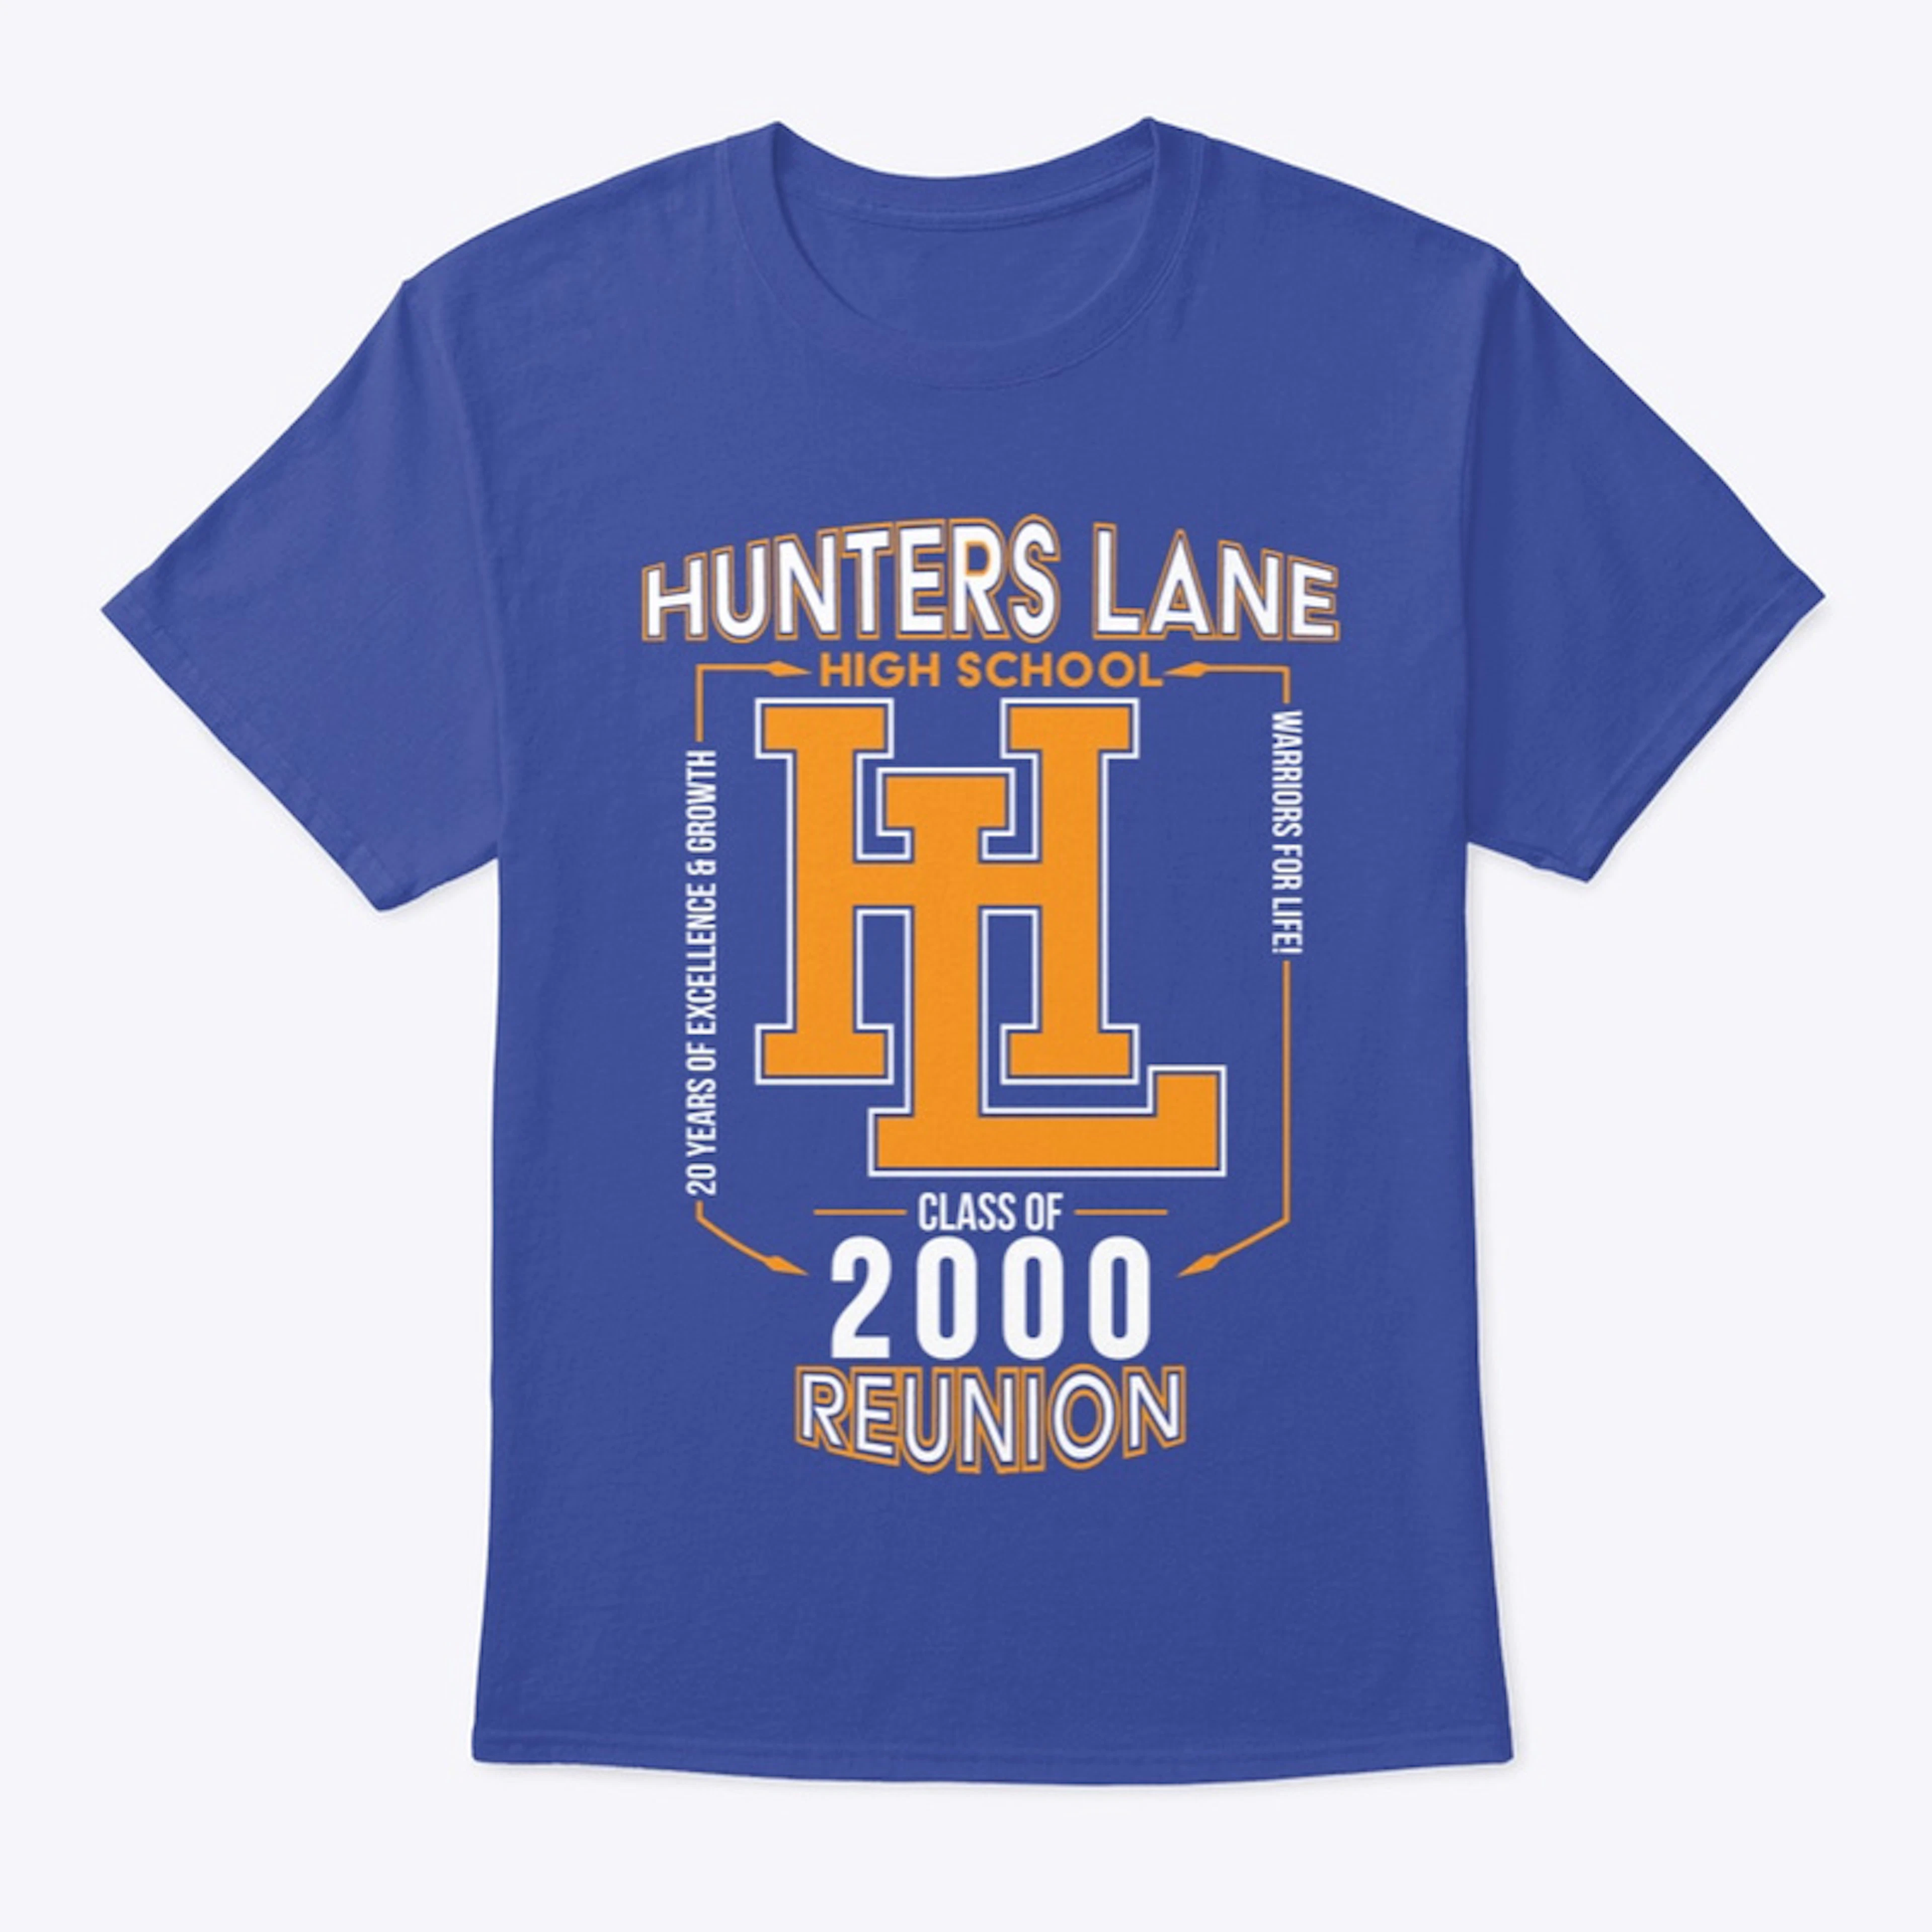 Hunters Lane reunion 